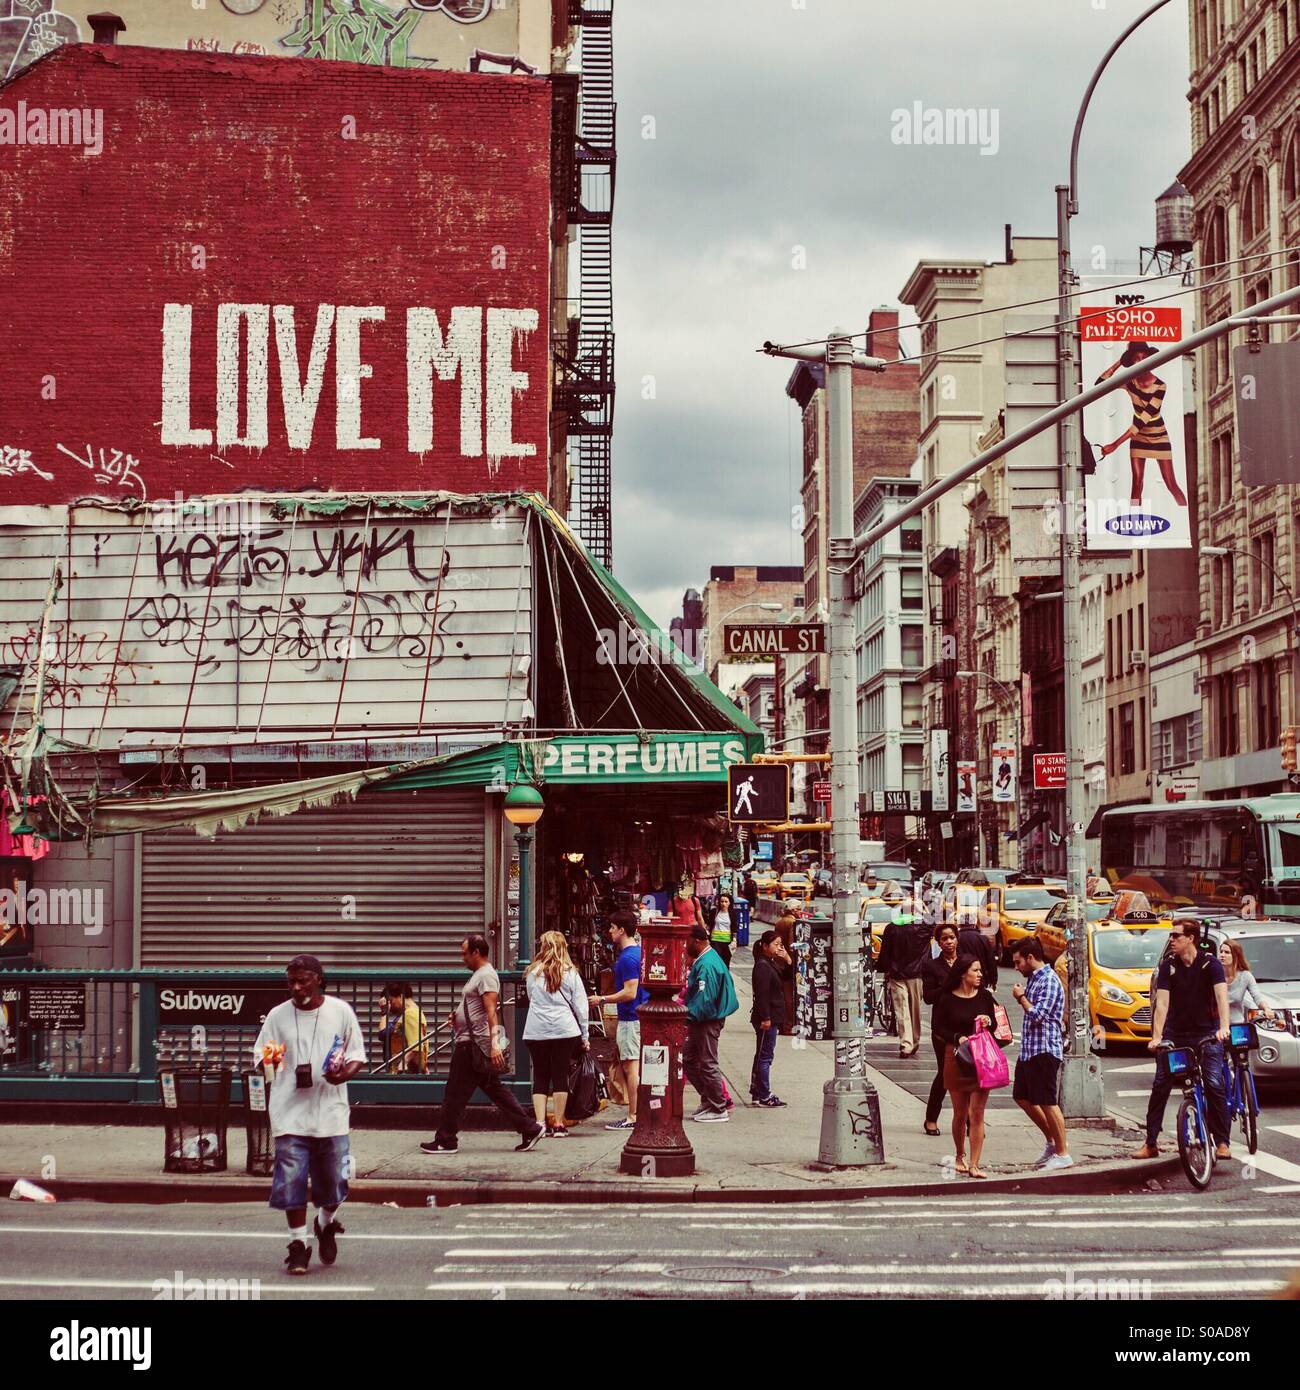 Citylife on Canal street in Manhattan, New York City Stock Photo